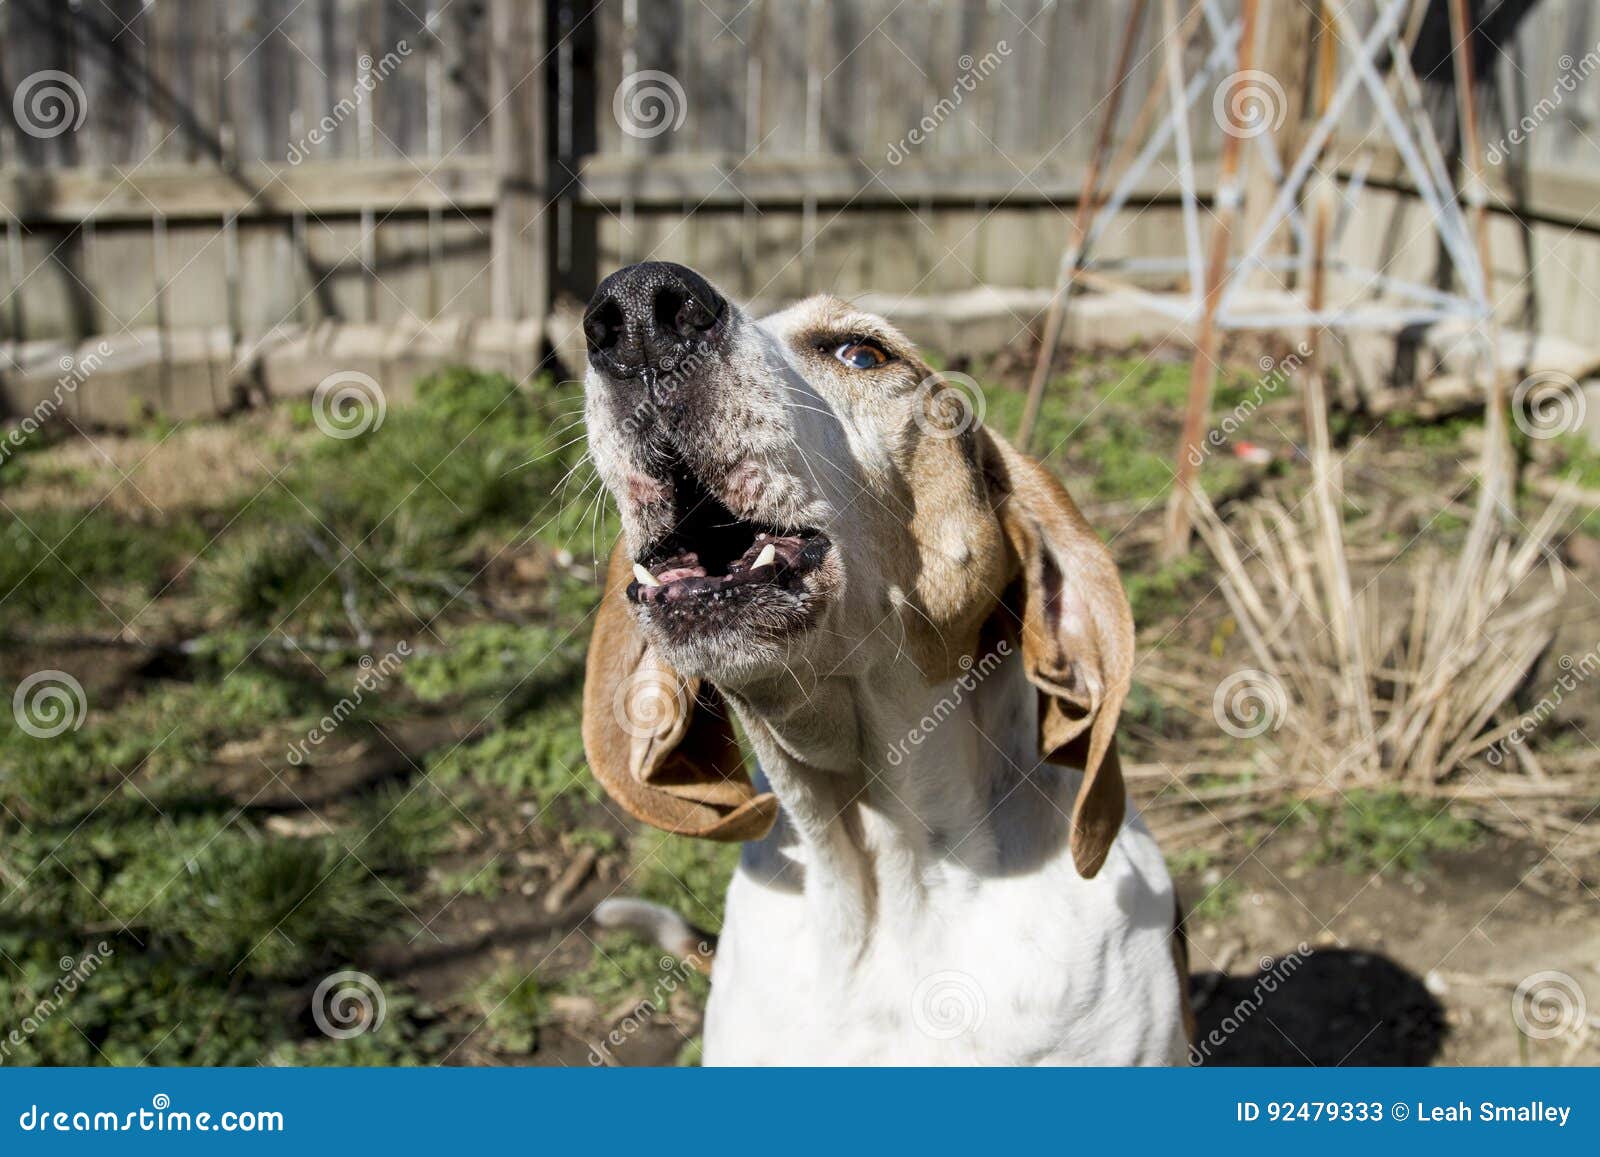 treeing walker coonhound howl